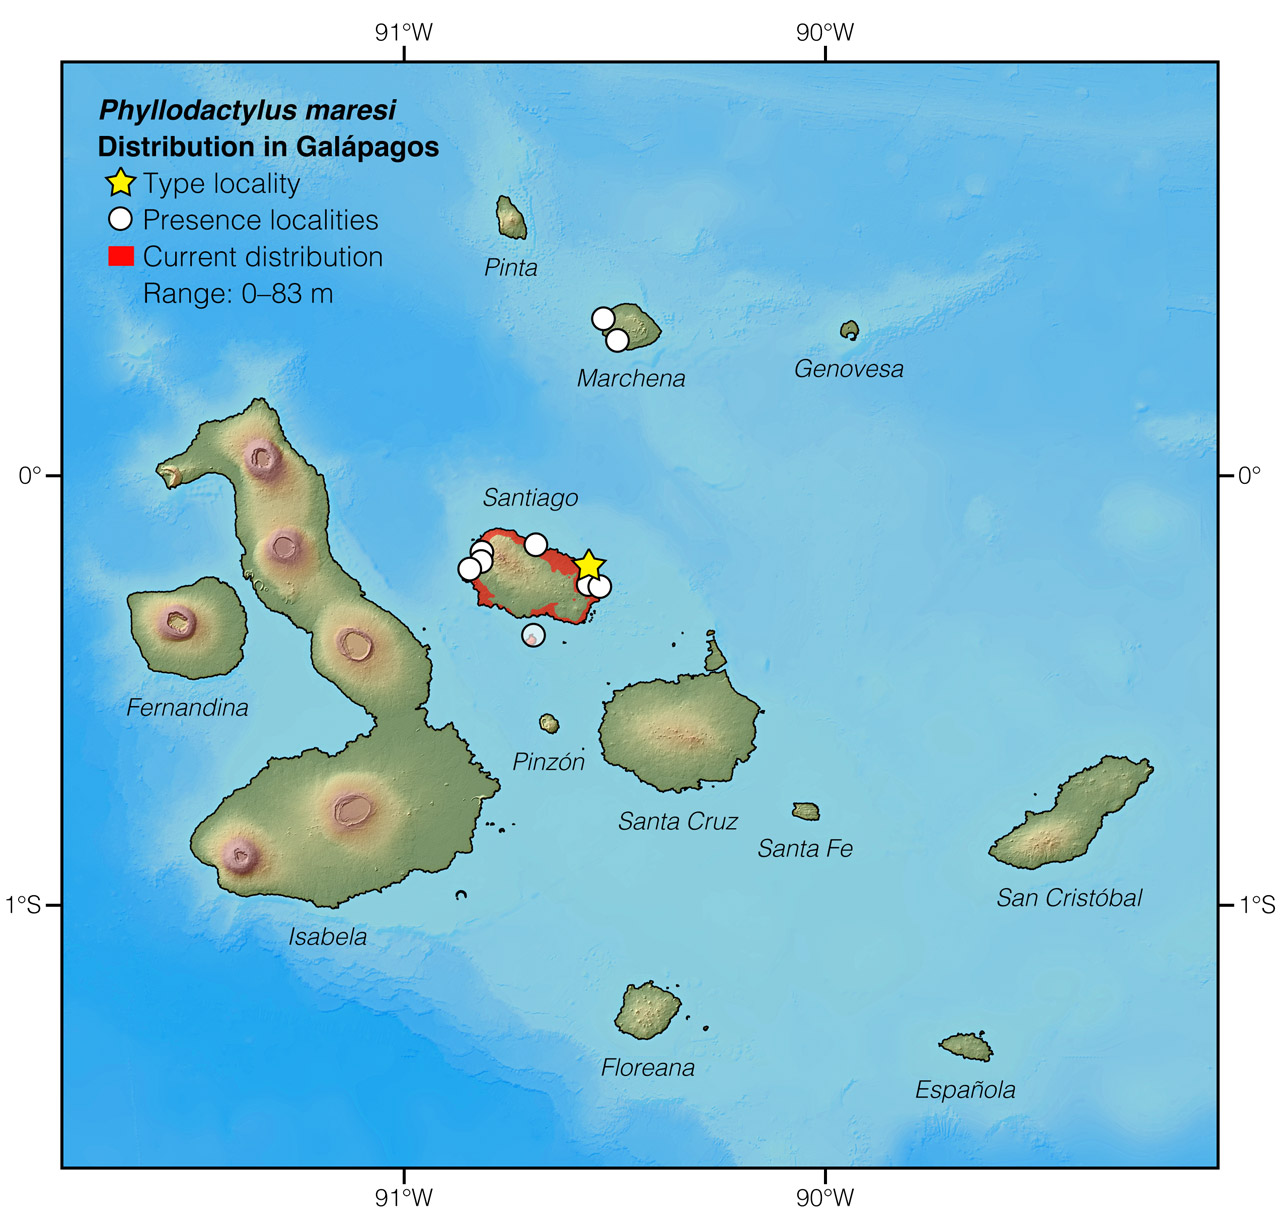 Distribution of Phyllodactylus maresi in Galápagos